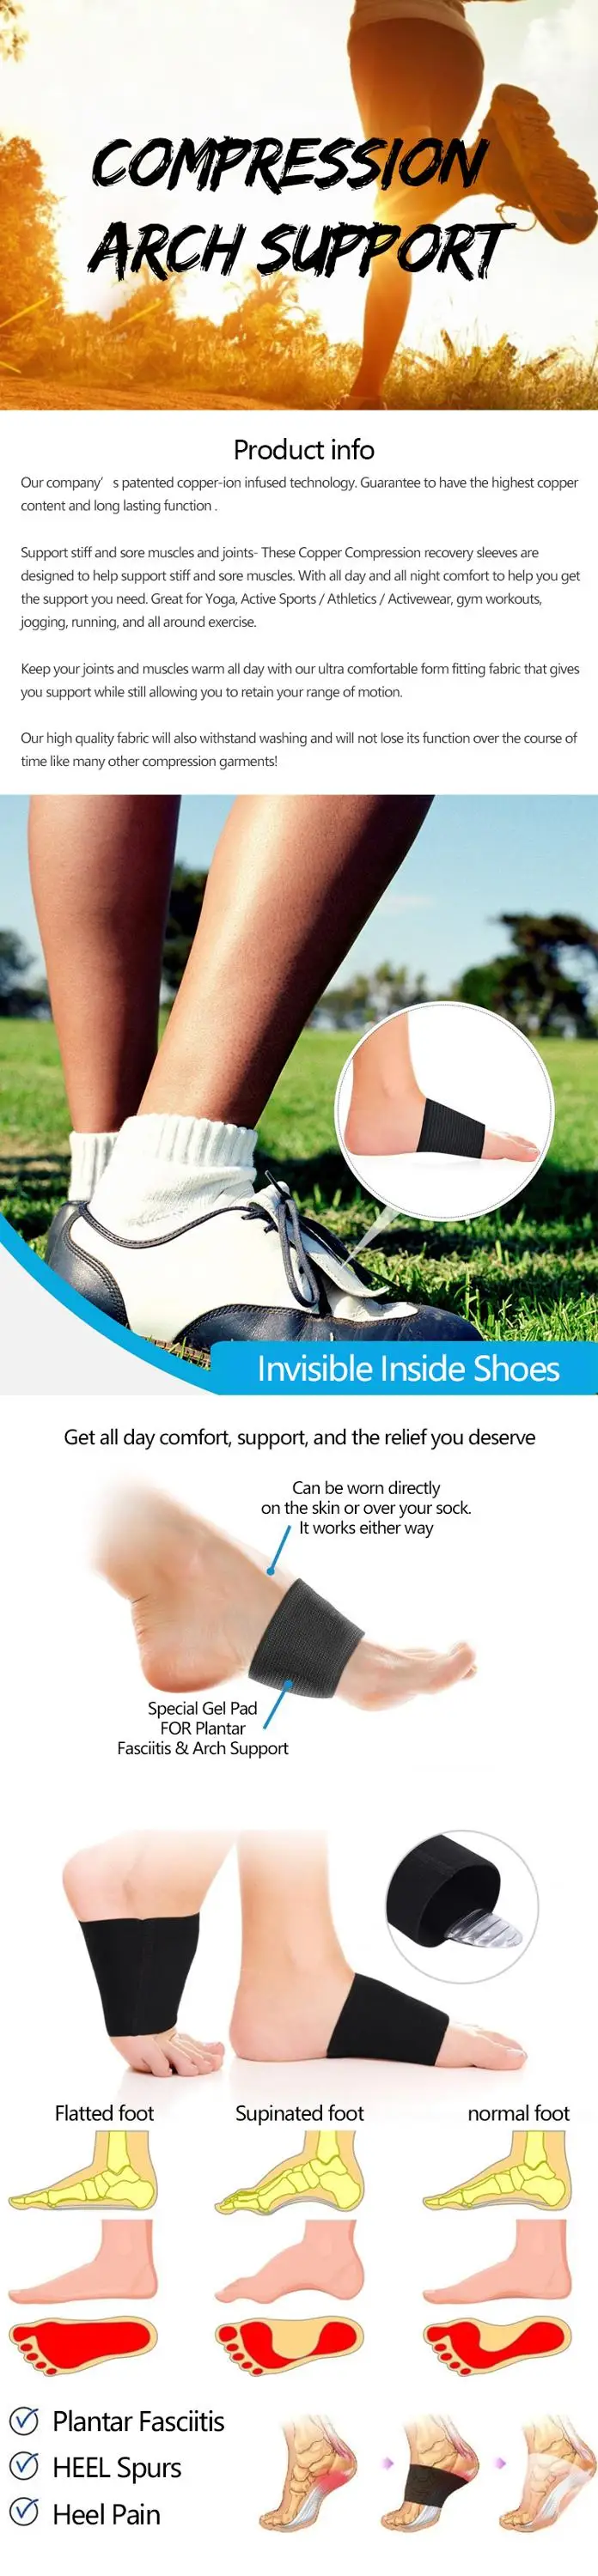 Enerup Adjustable Unisex Baseball Sport Elastic Compression Ankle Protective Sleeve Brace Support Wrap